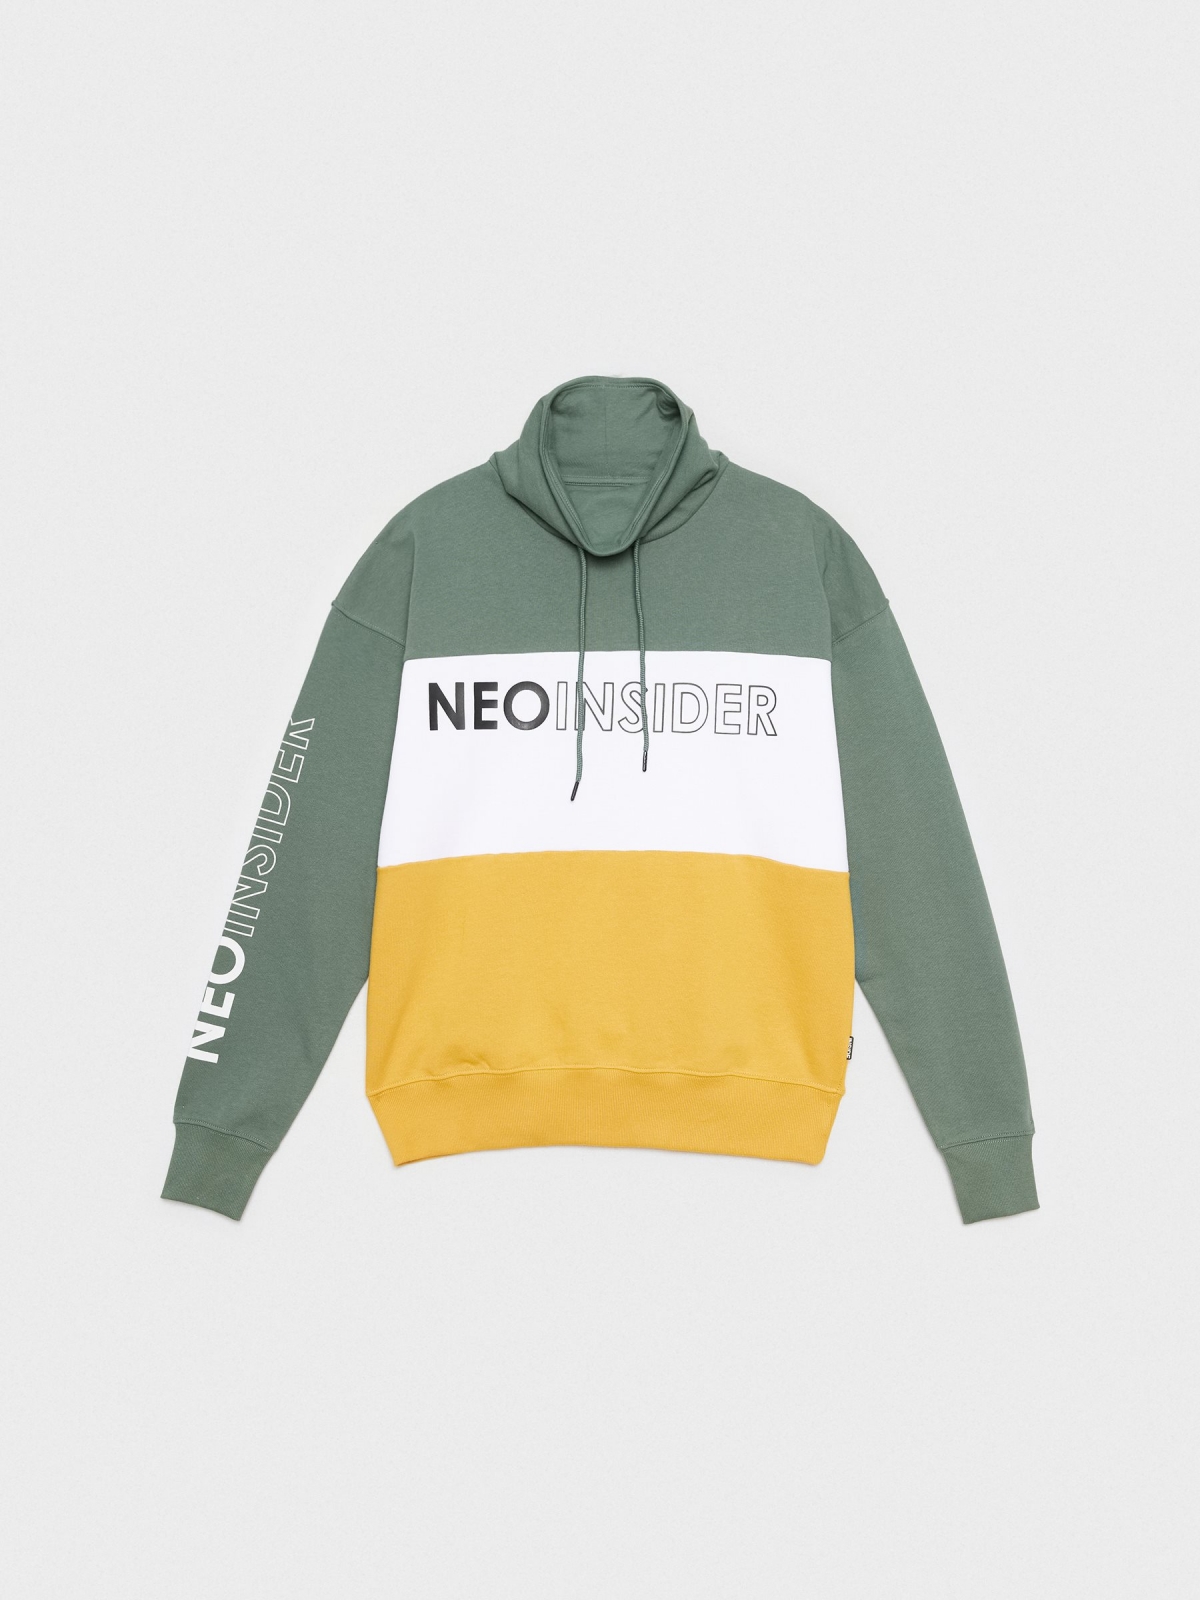  NEOINSIDERS Sweatshirt greyish green